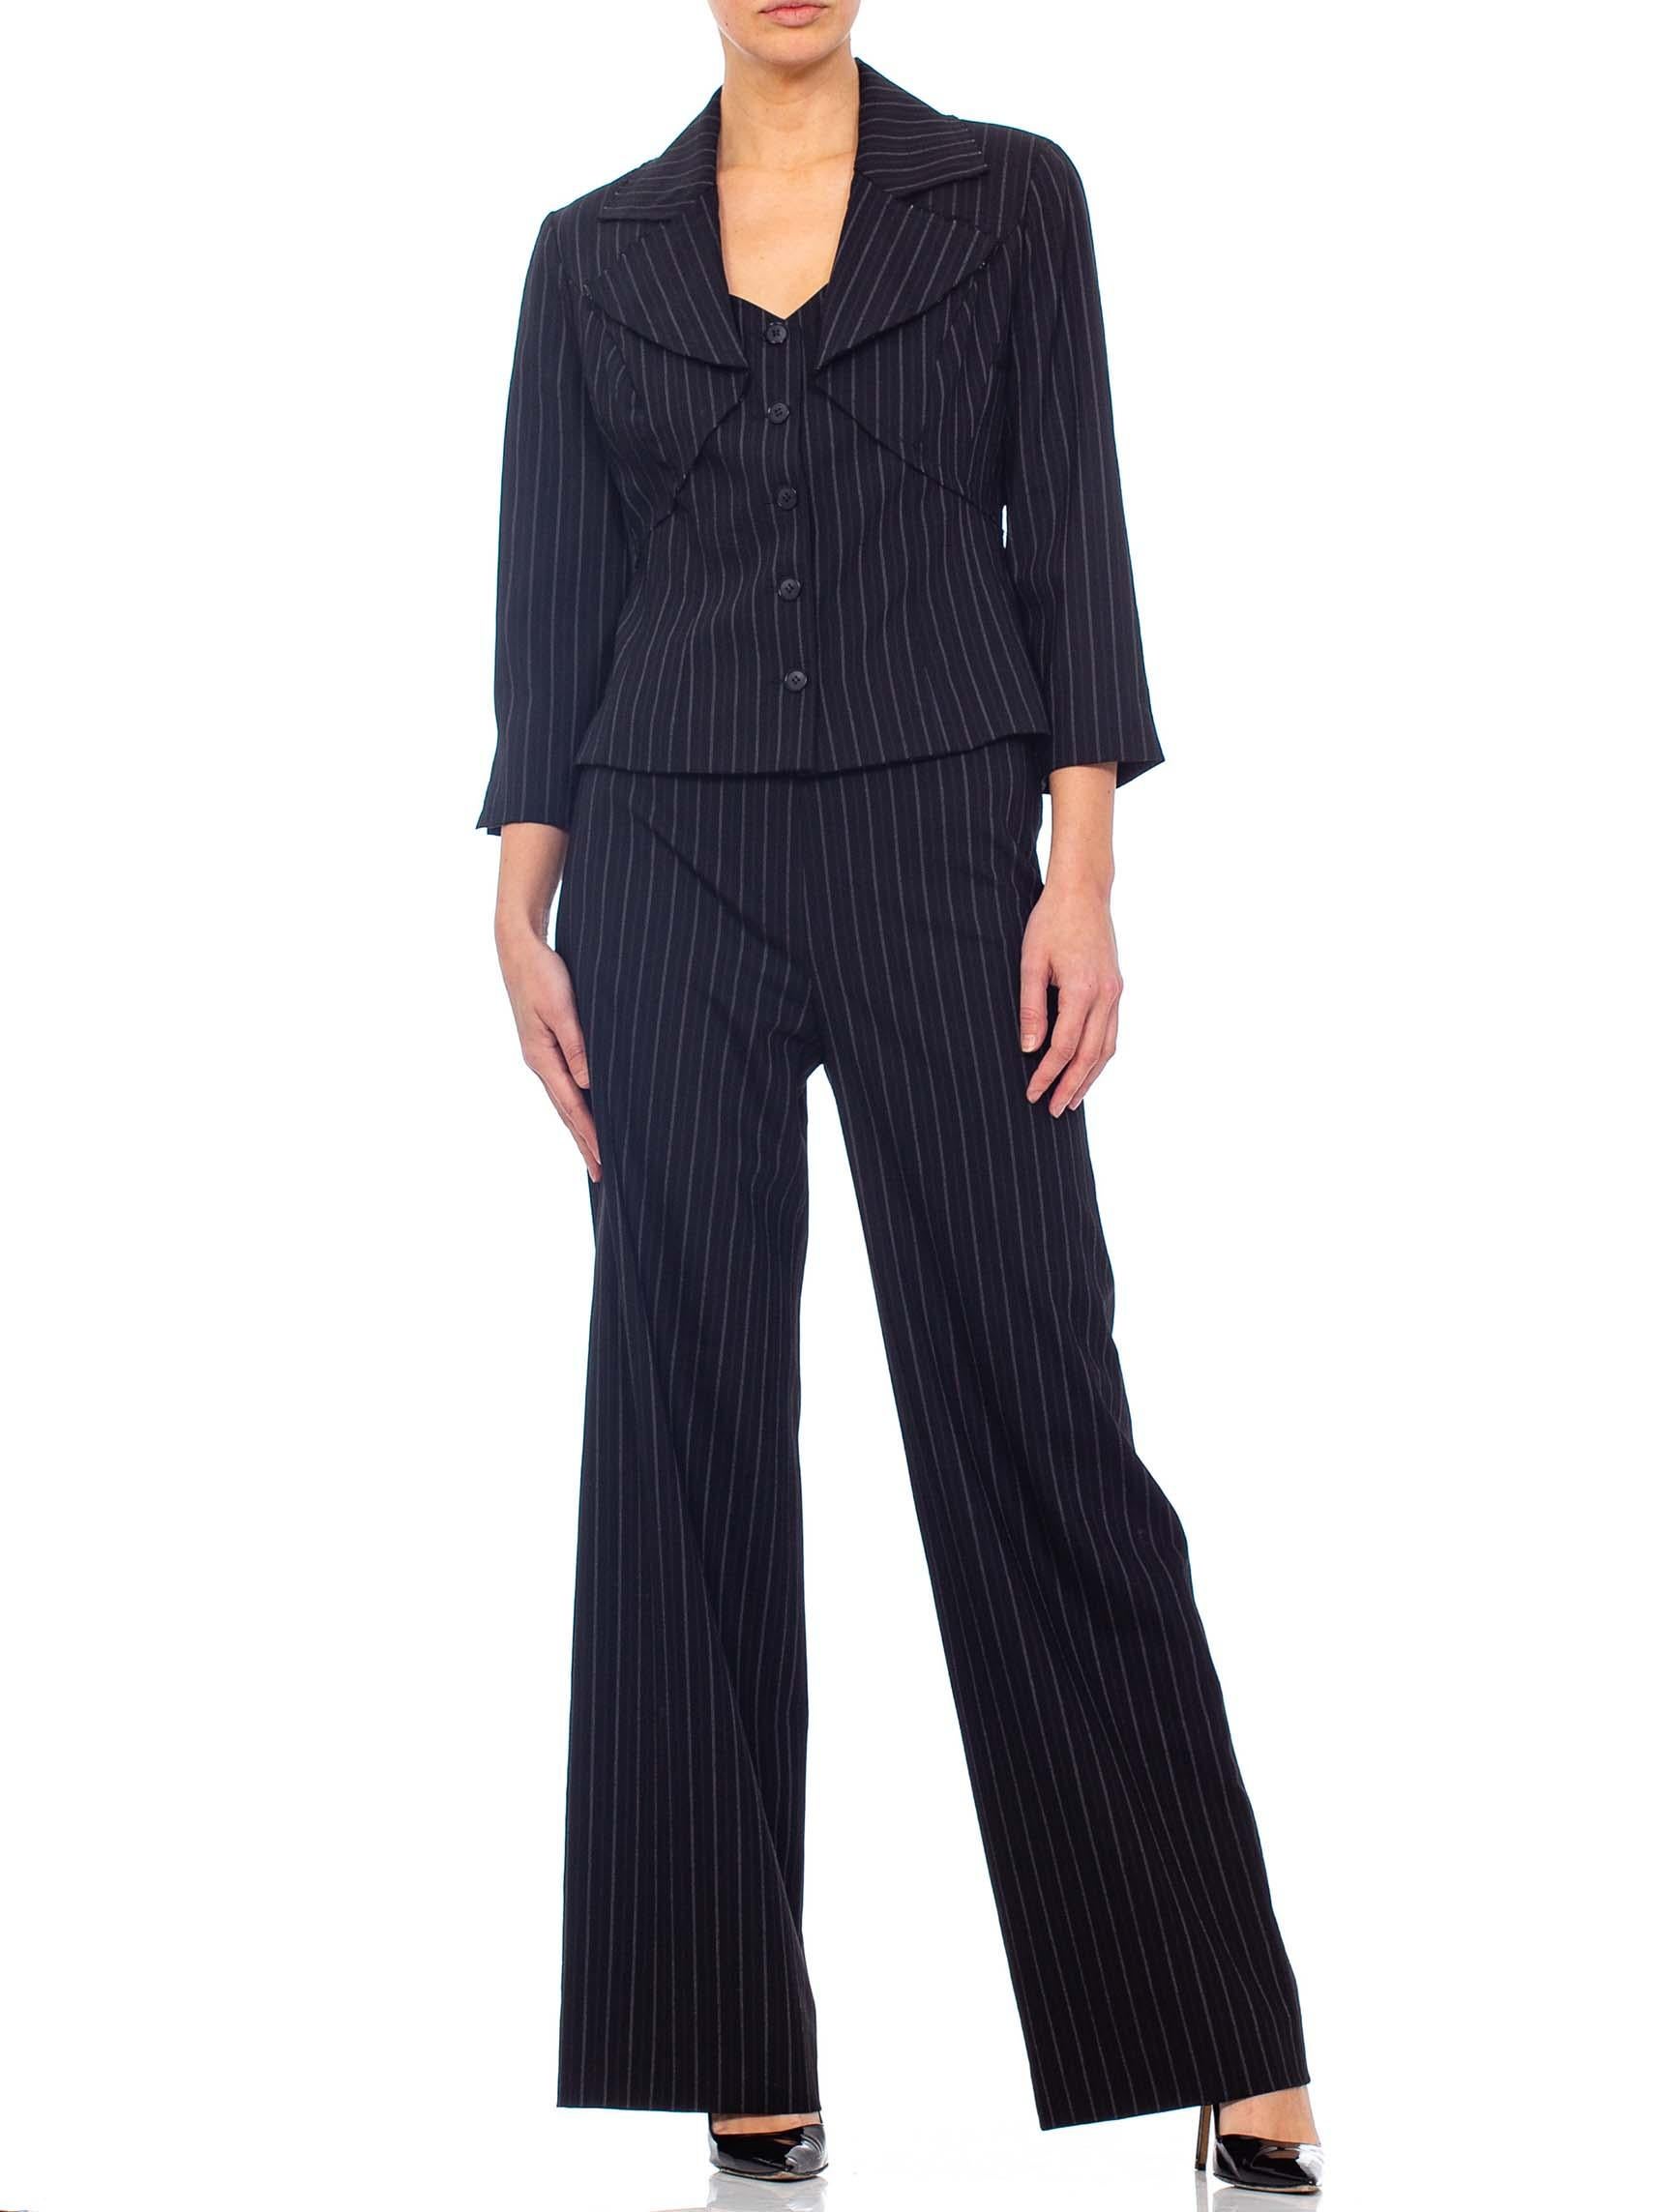 1990s Dark Grey Rayon & Wool Pinstripe Pant Suit  5